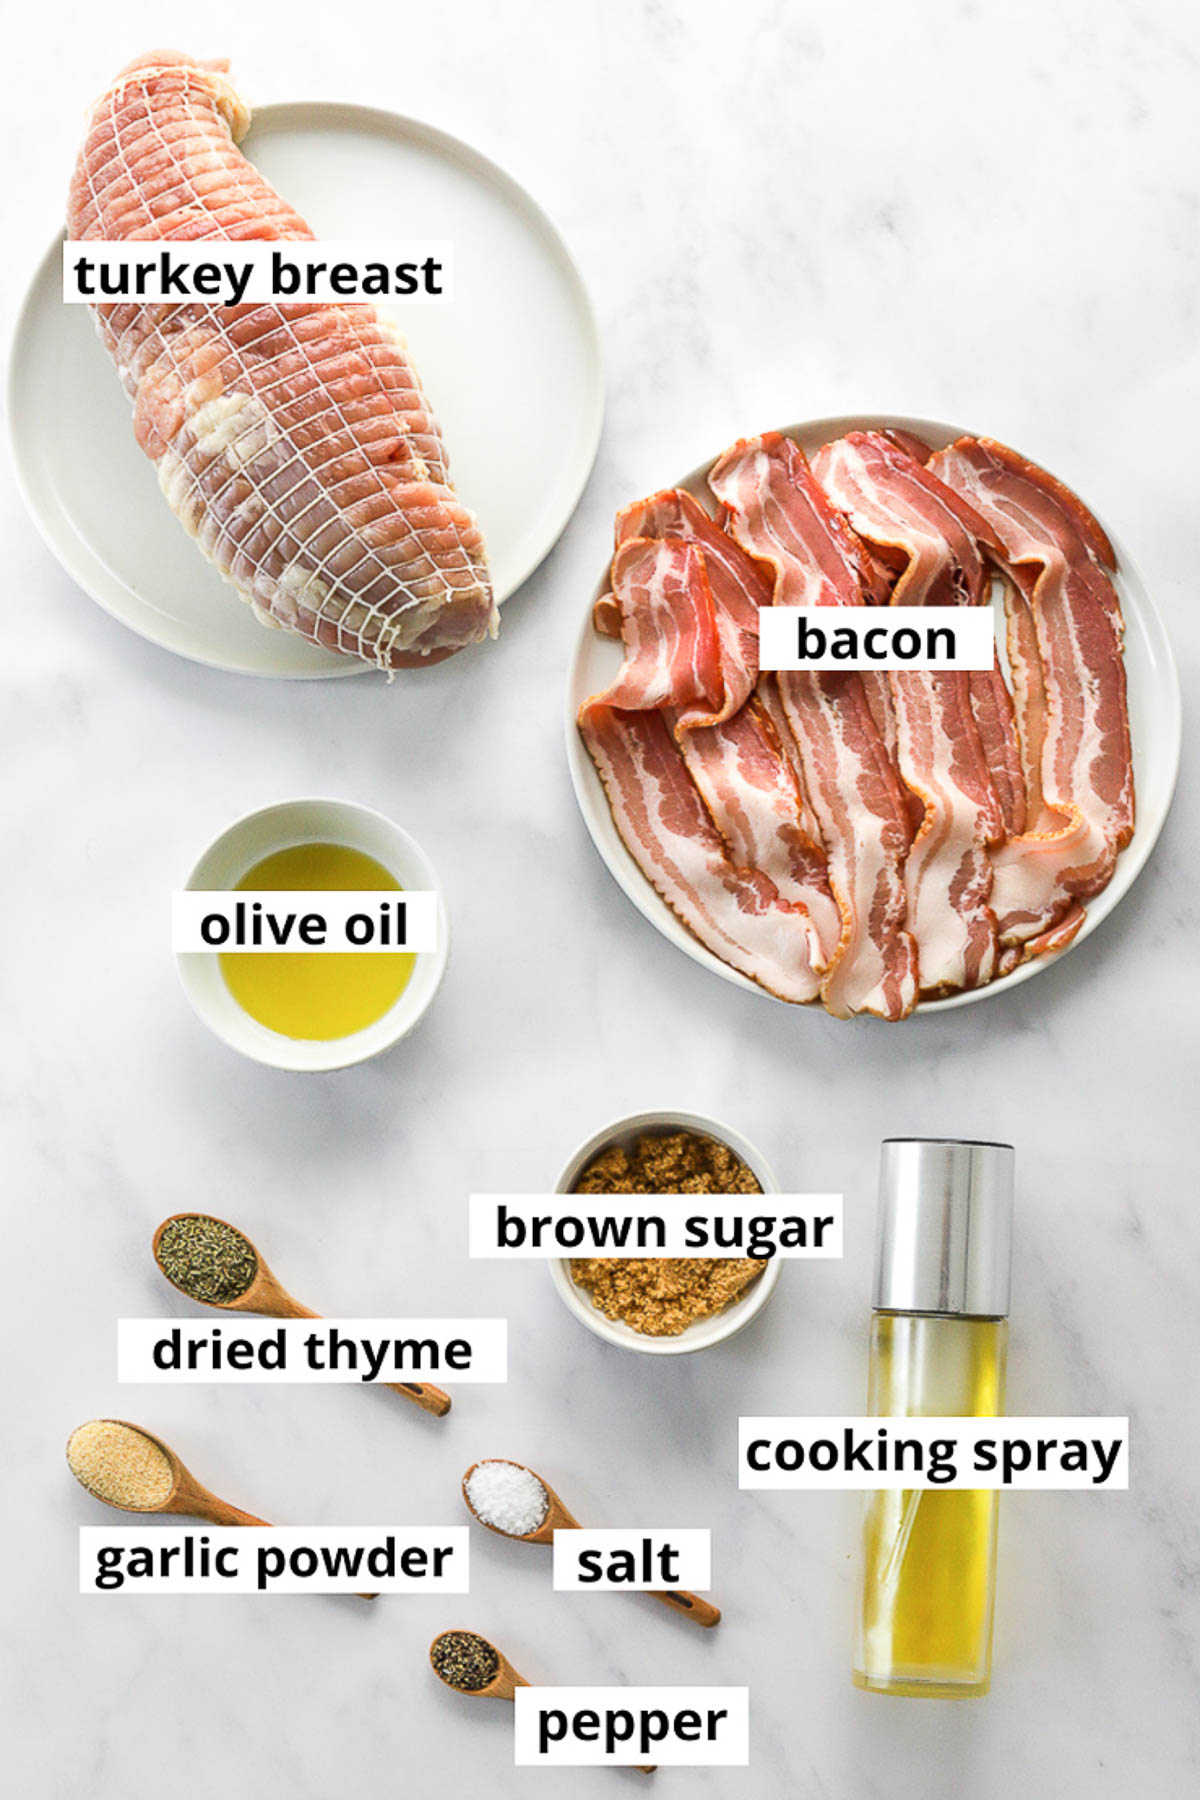 Turkey breast, bacon, olive oil, brown sugar, dried thyme, garlic powder, cooking spray, salt and pepper.